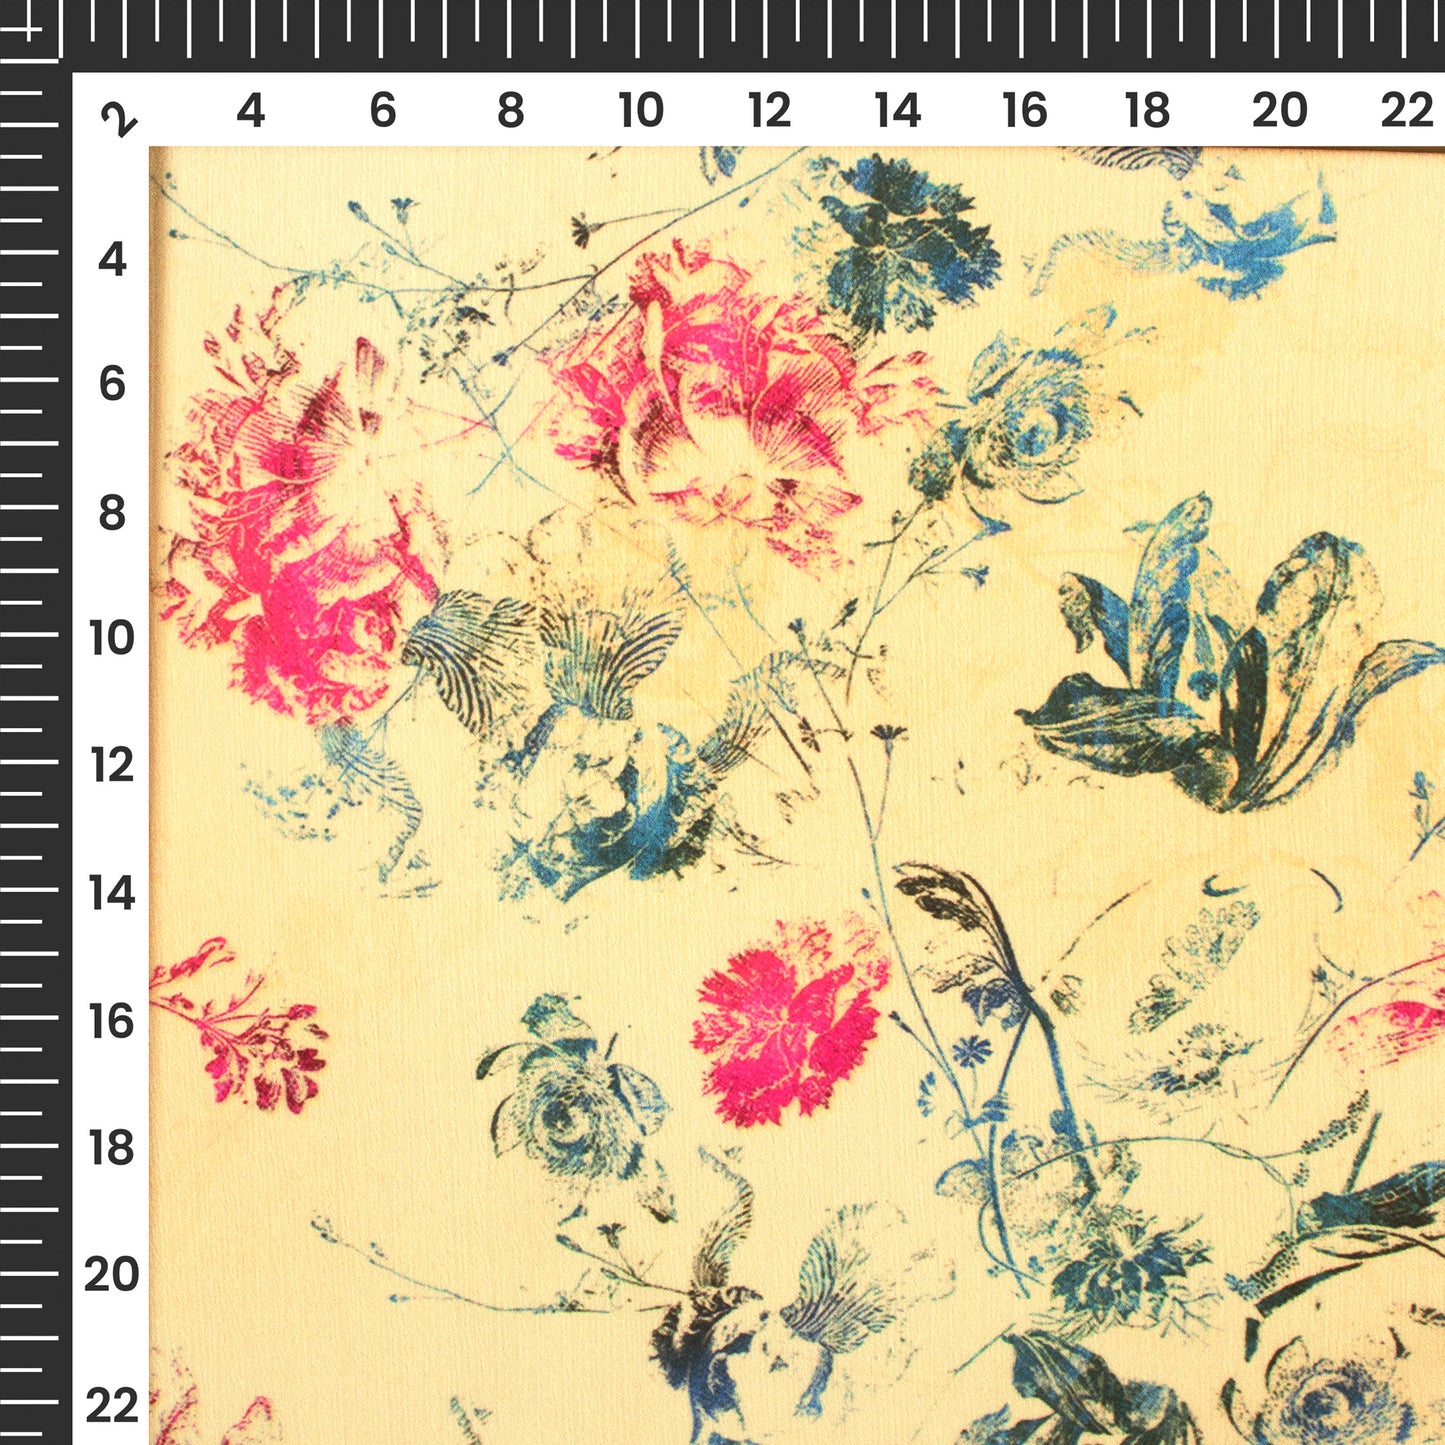 Pastel Yellow Floral Digital Print Chiffon Satin Fabric